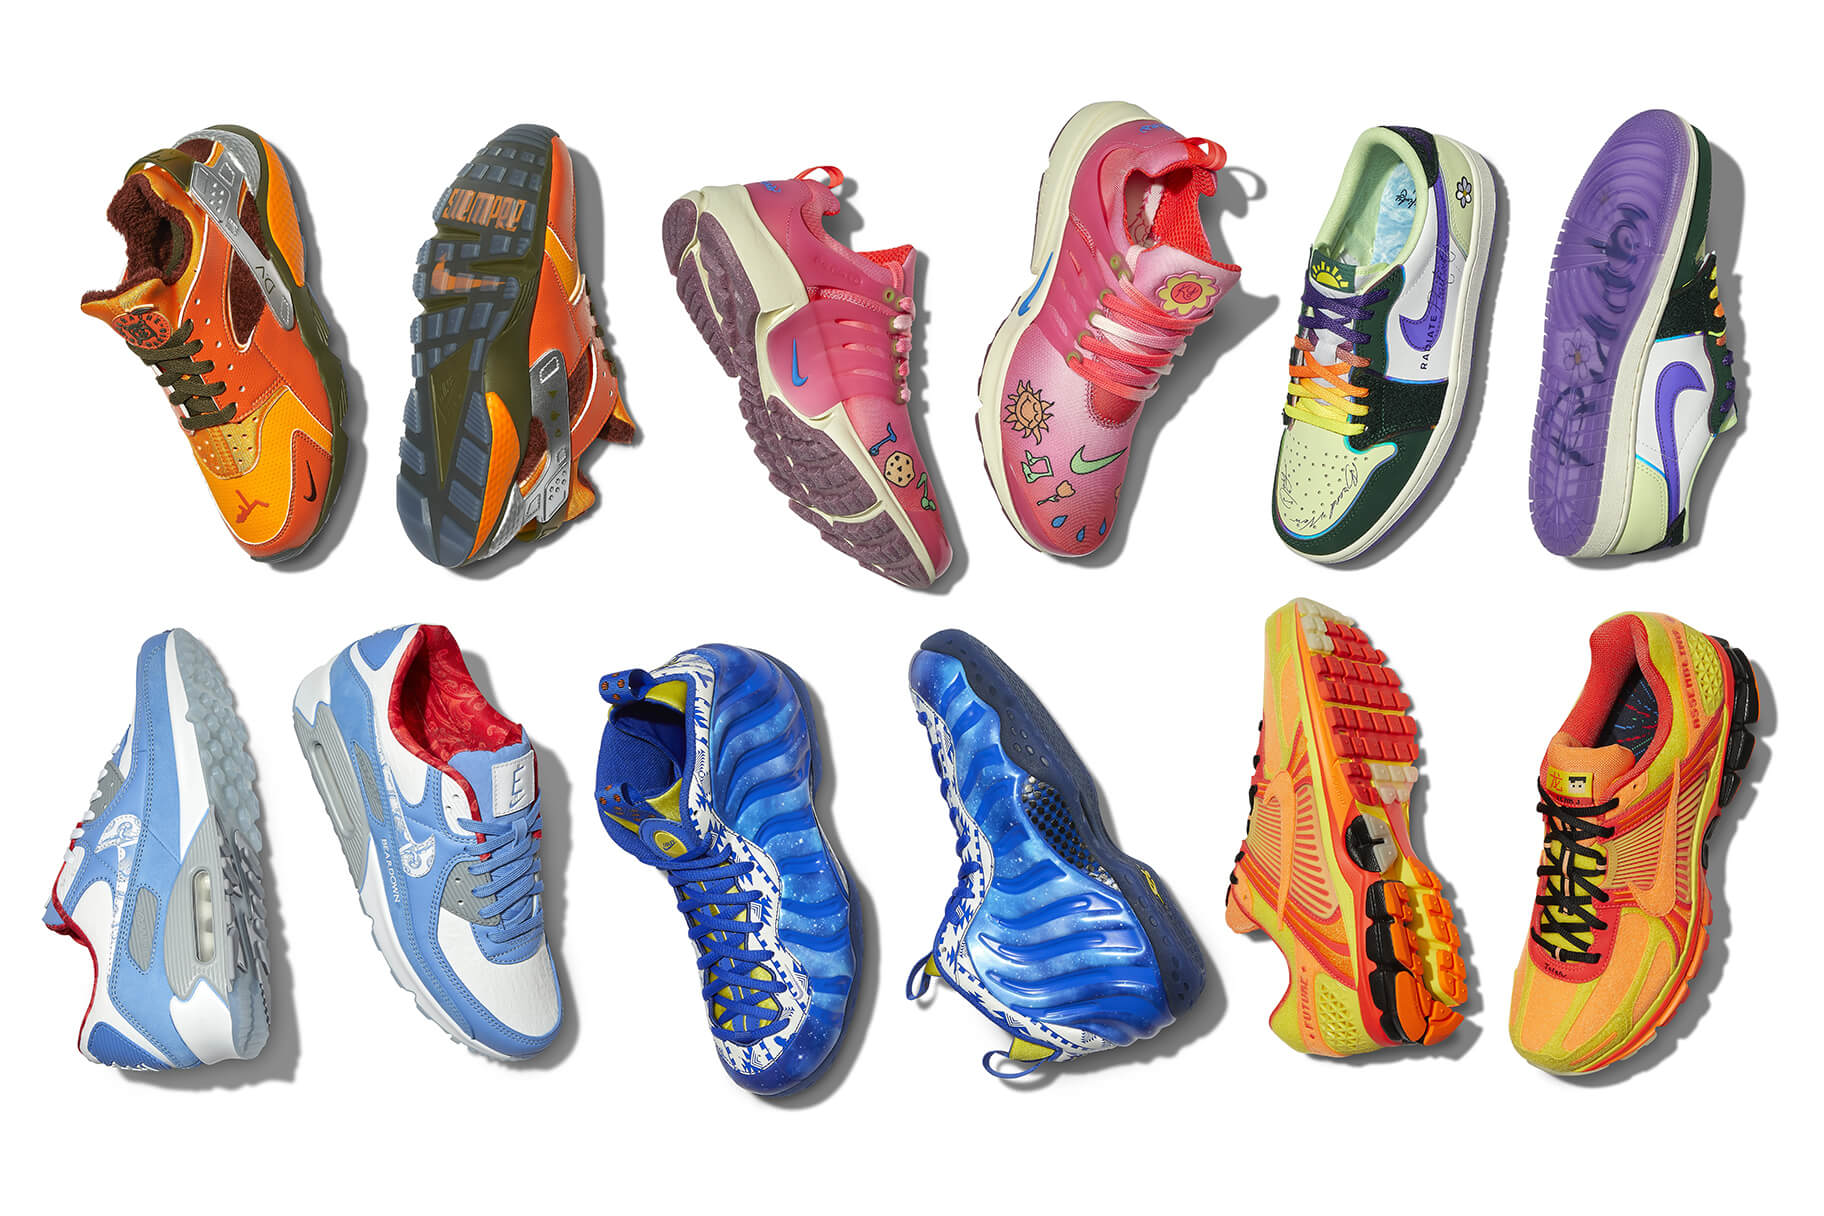 Nike y el Hospital Infantil Doernbecher de la OHSU anuncian la colección Doernbecher Freestyle XVIII